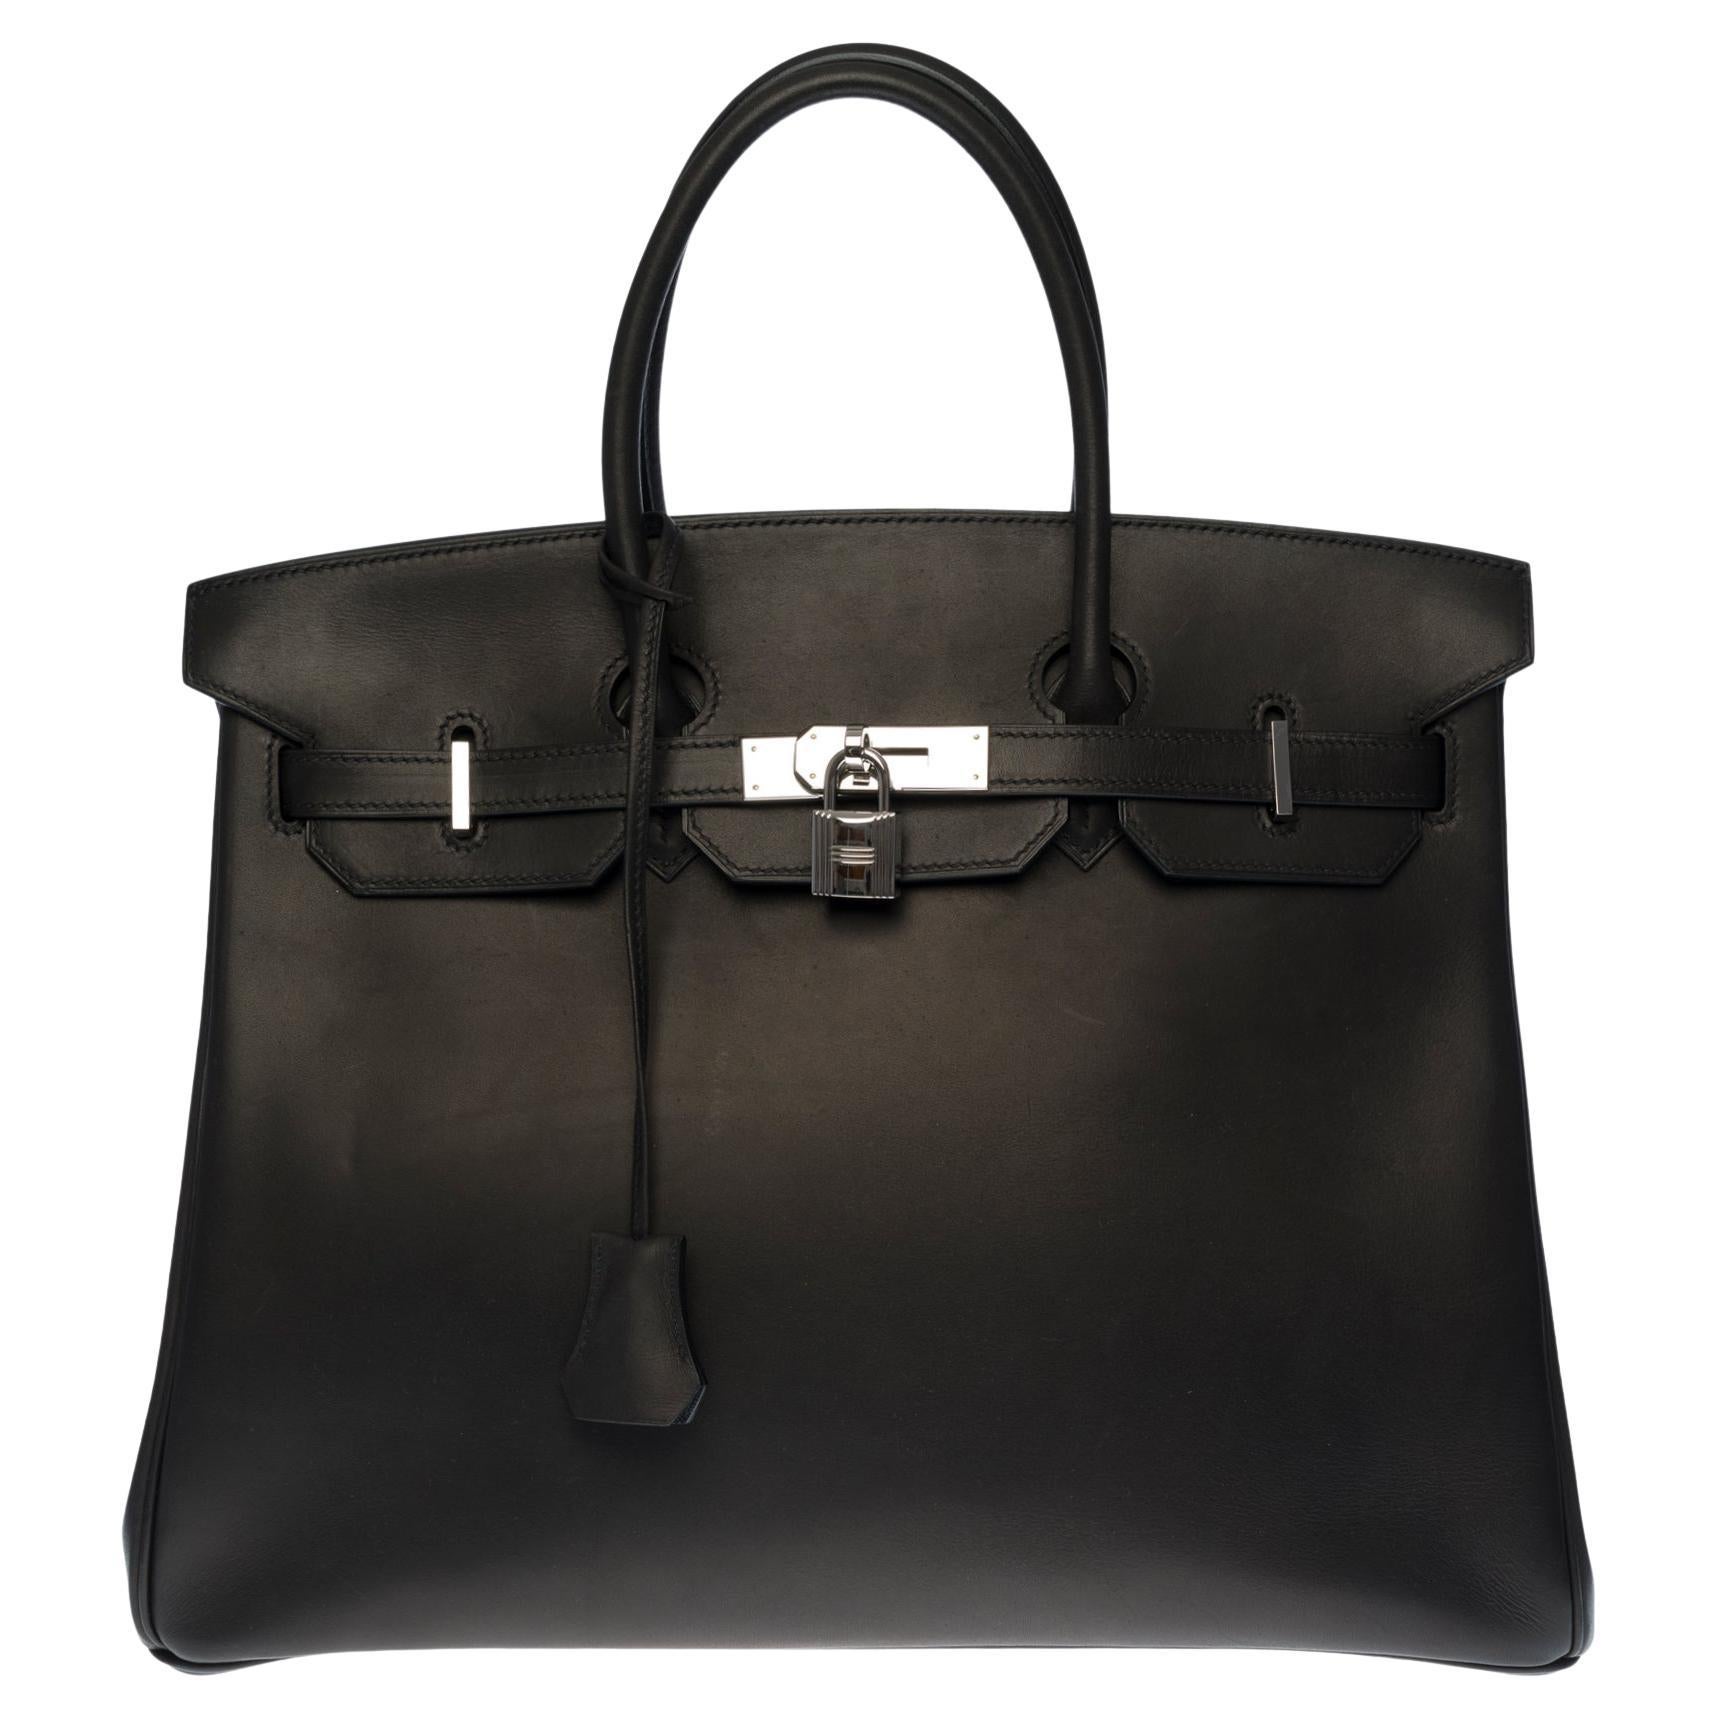 NEW - ULTRA RARE- Hermès Birkin 35 handbag in Black Barenia leather , SHW